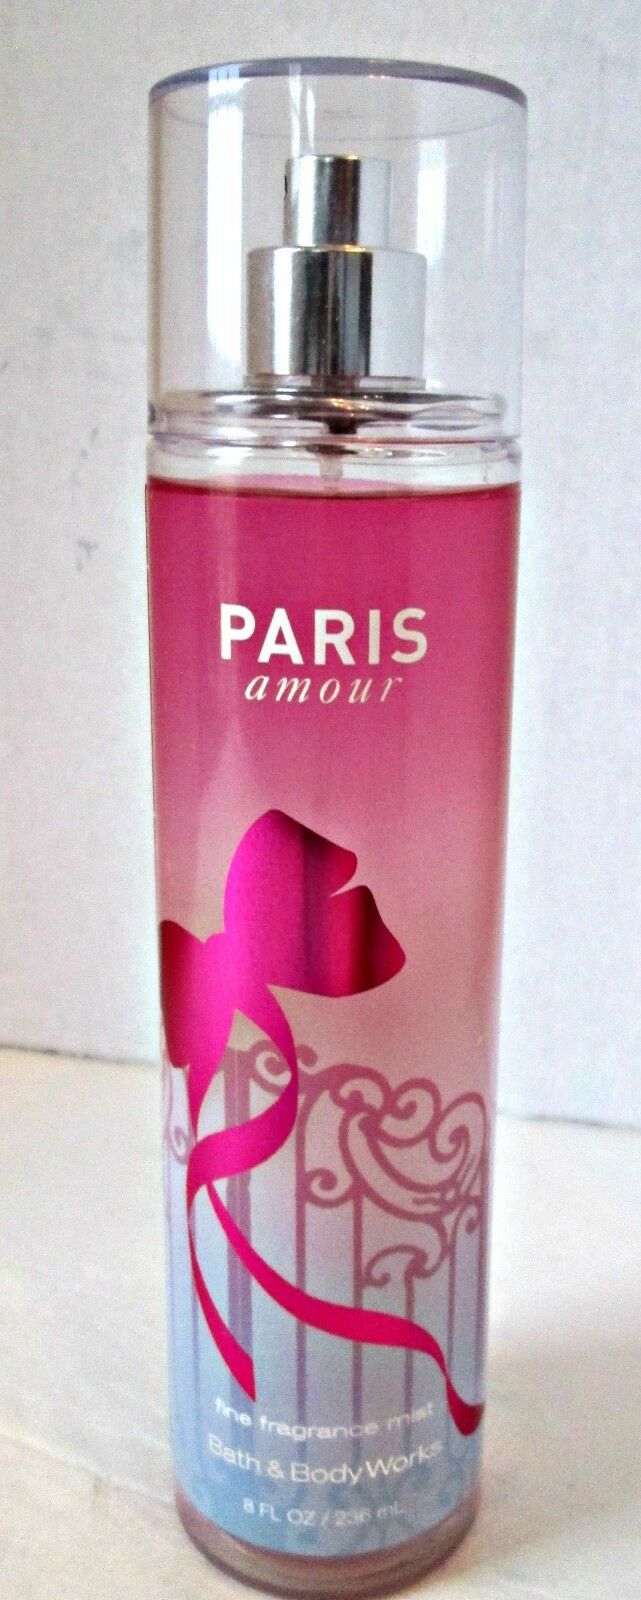 Bath Body Works Paris amour fine fragrance mist spray 8 oz retired discontinued